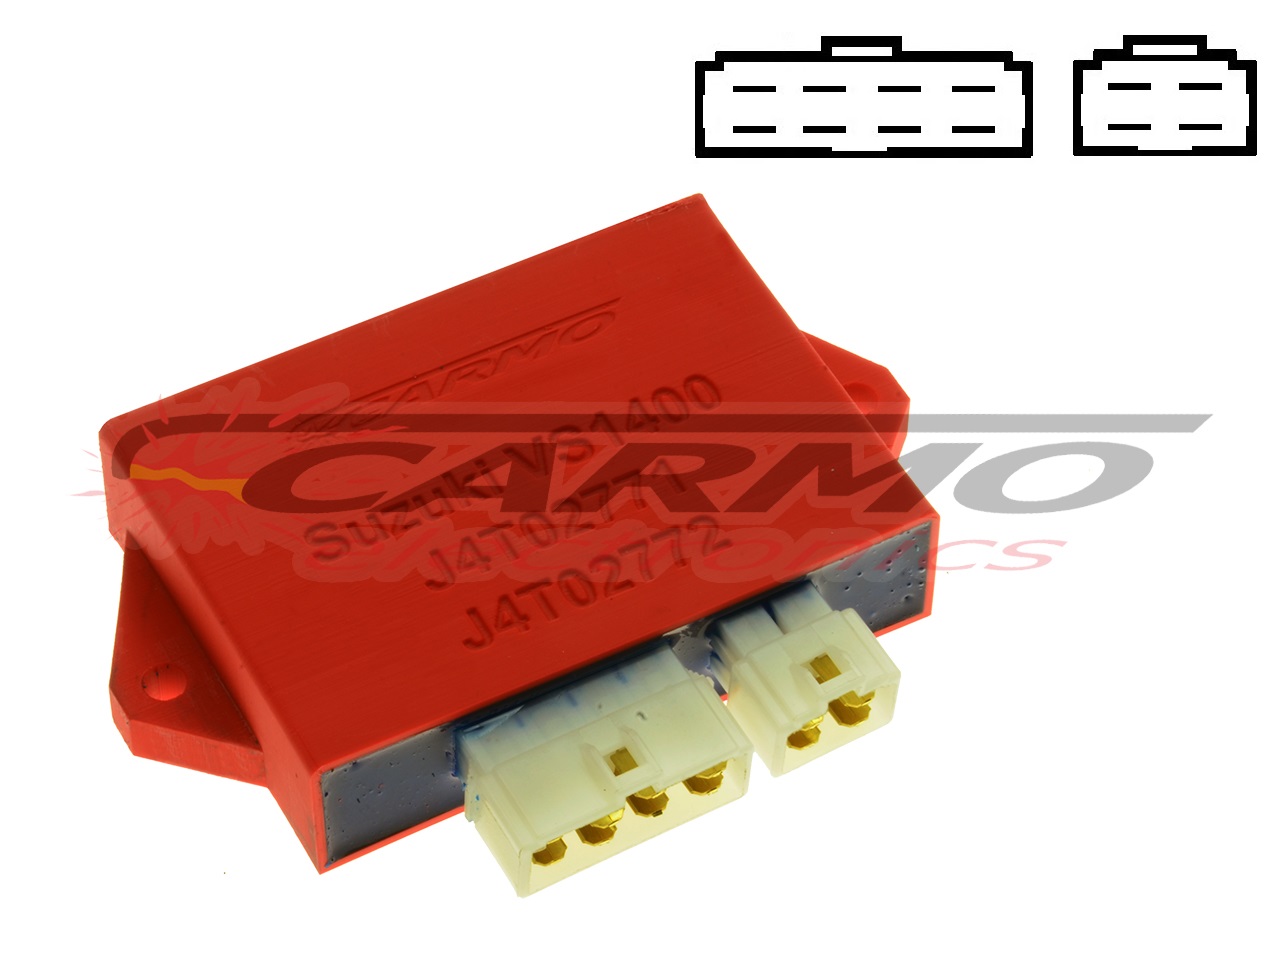 Suzuki VS1400 Intruder VX51L igniter ignition module CDI TCI Box J4T02771 J4T02772 (8 + 4 pins connectors) - Click Image to Close